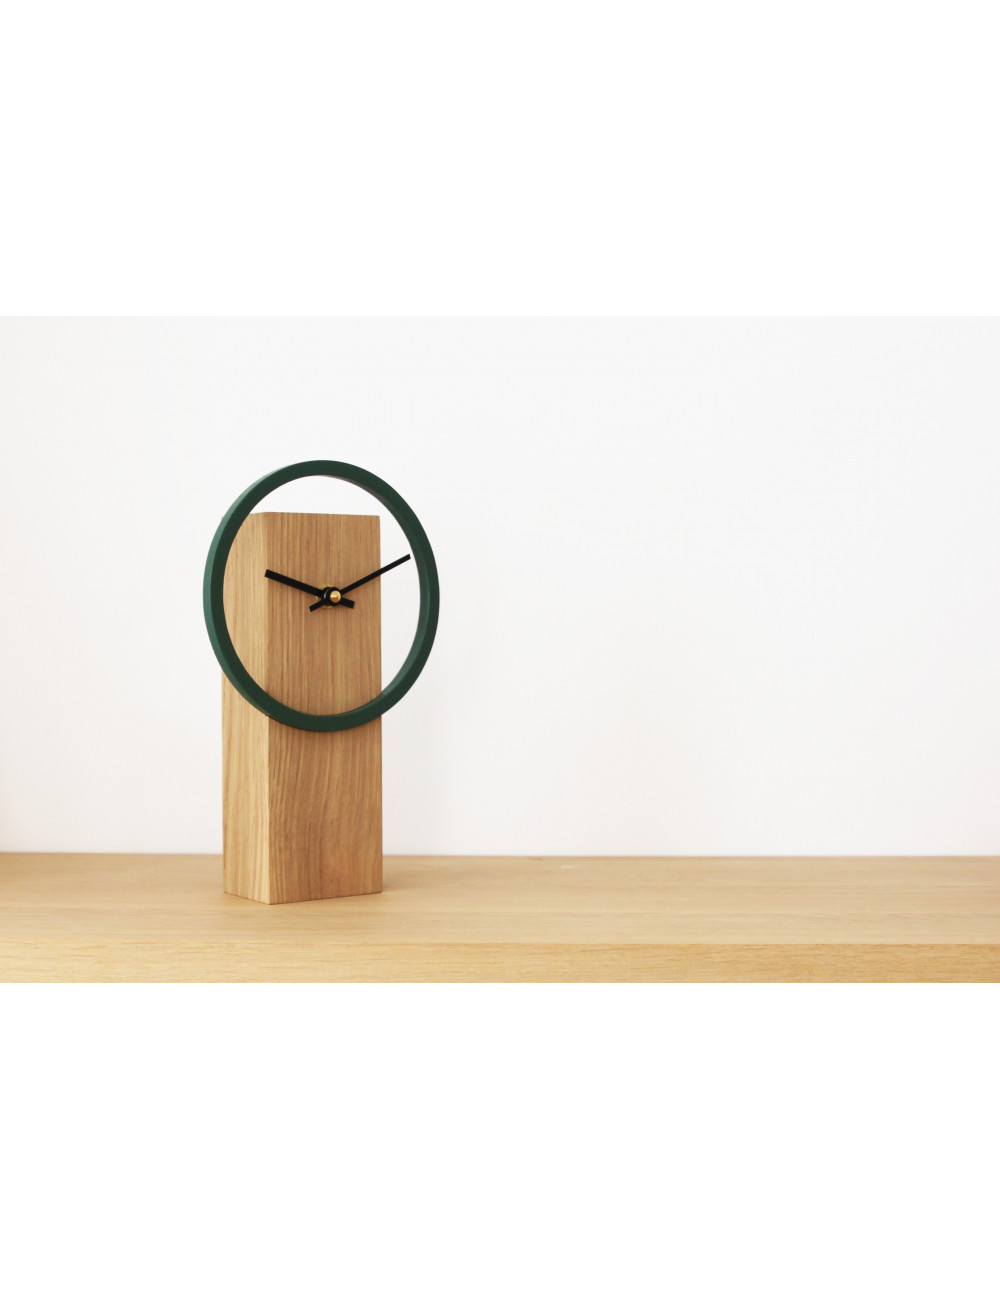 Horloge Cyclock - Vert Celestat Drugeot Manufacture